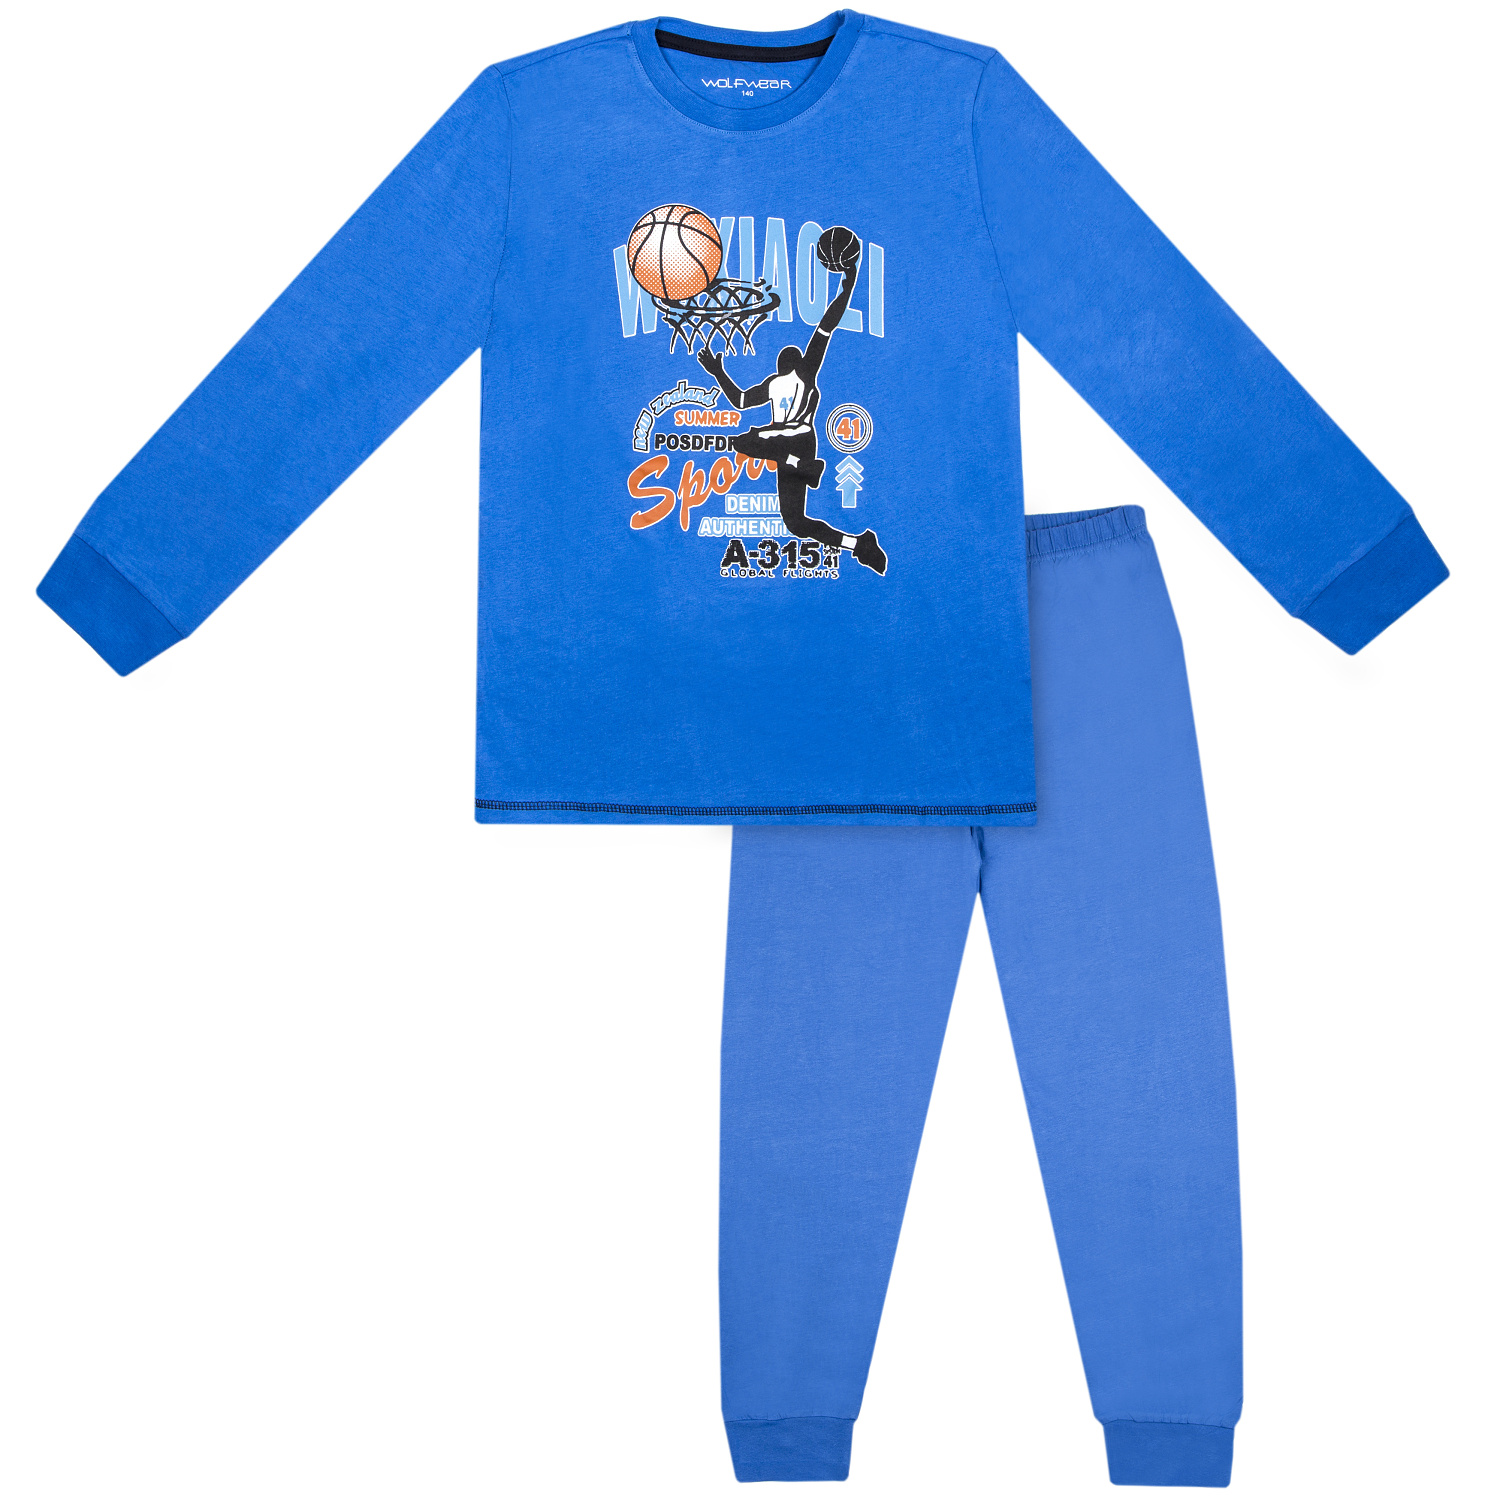 Chlapecké pyžamo - Wolf S2256B, modrá Barva: Modrá, Velikost: 140